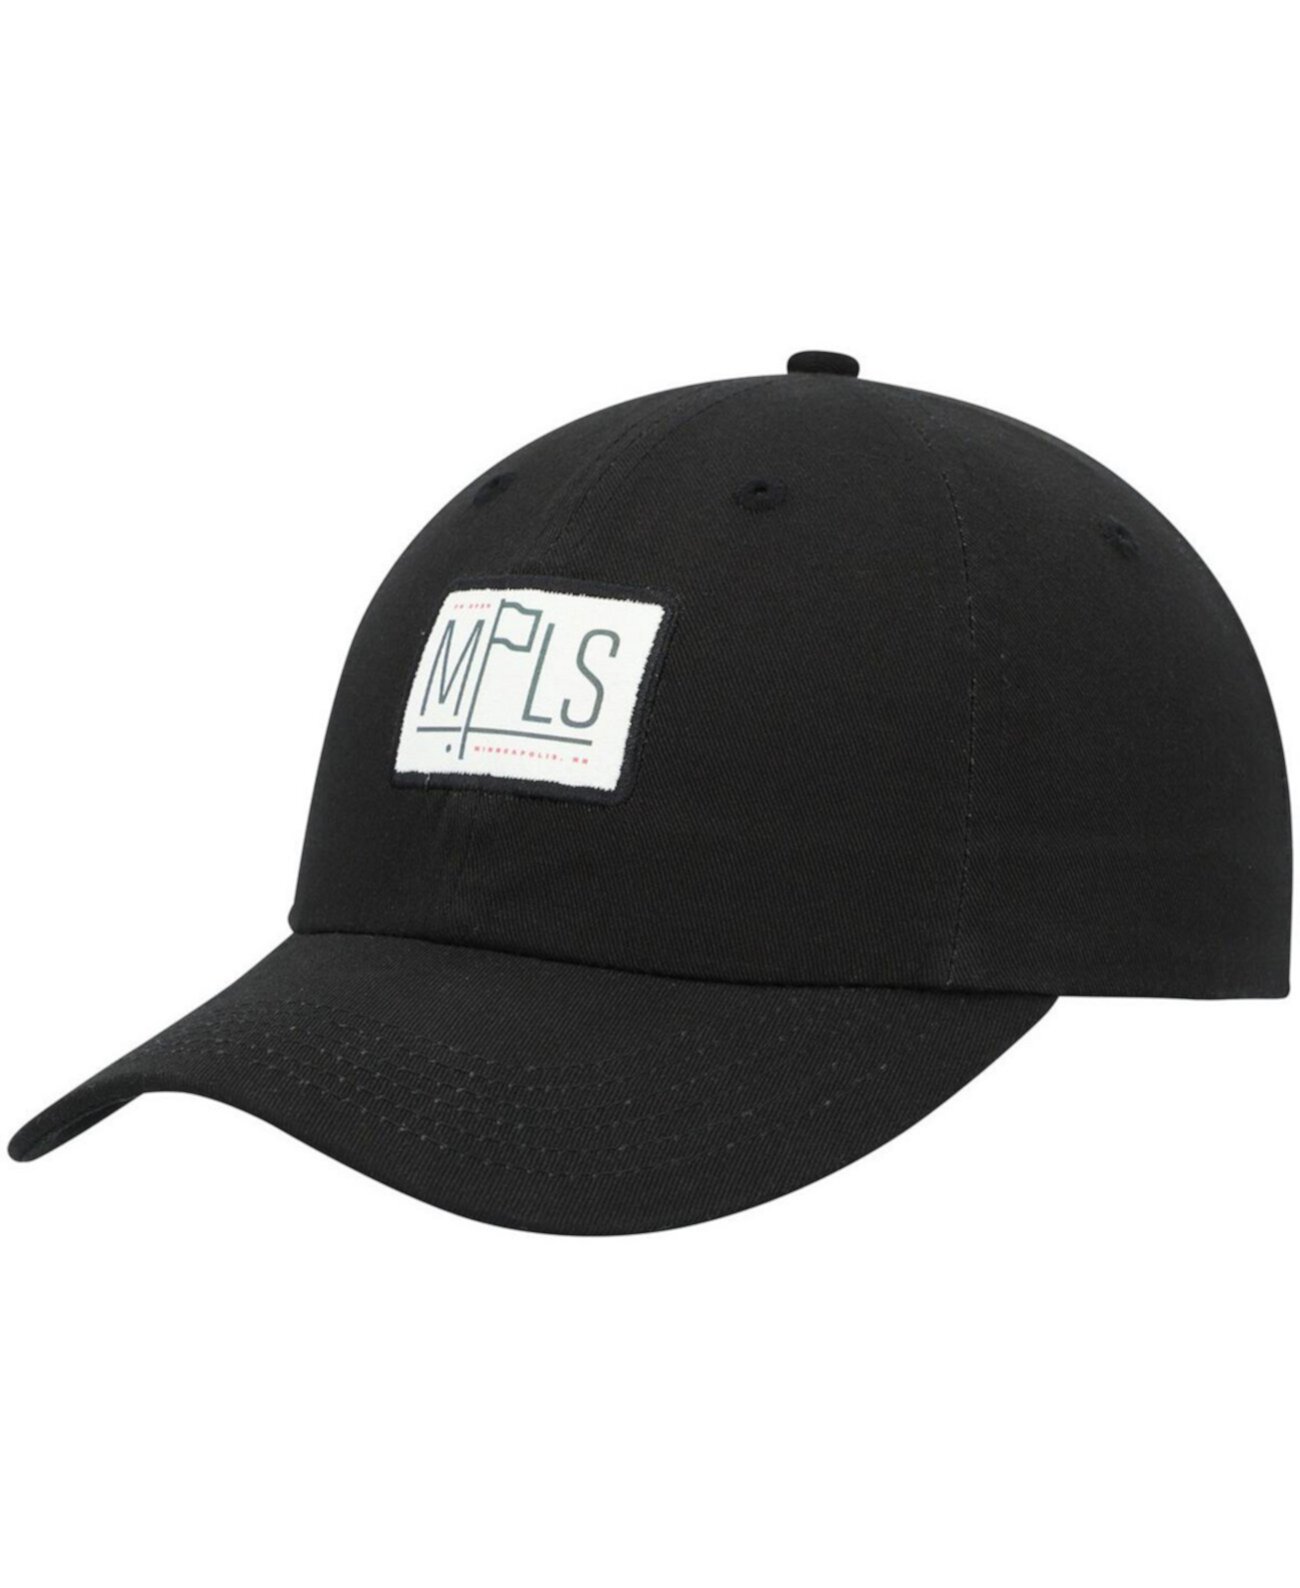 Мужская черная регулируемая шапка 3M Open MPLS Imperial